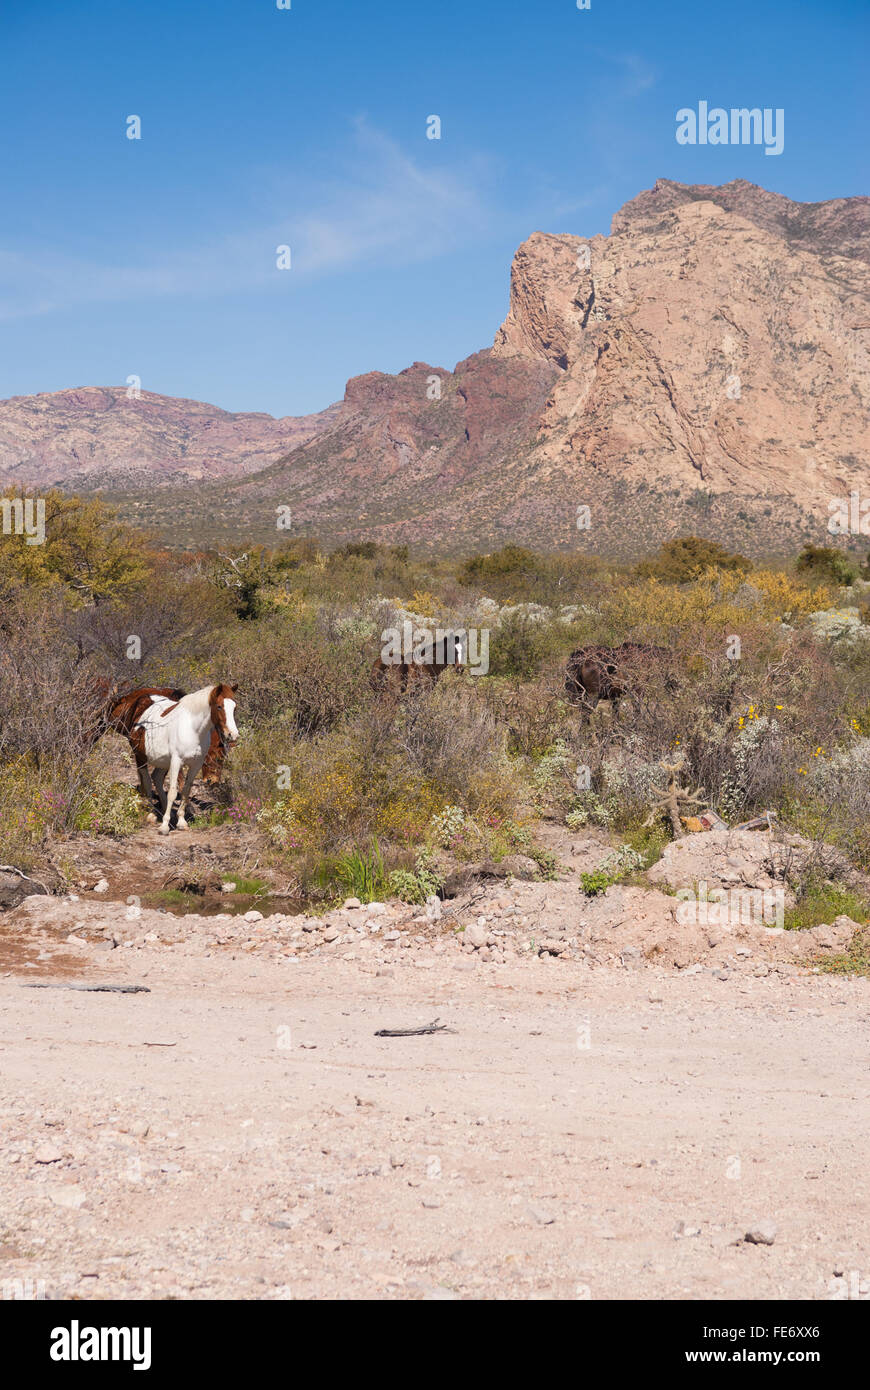 Wild horses in Mountain desert of Sonora Mexico Stock Photo